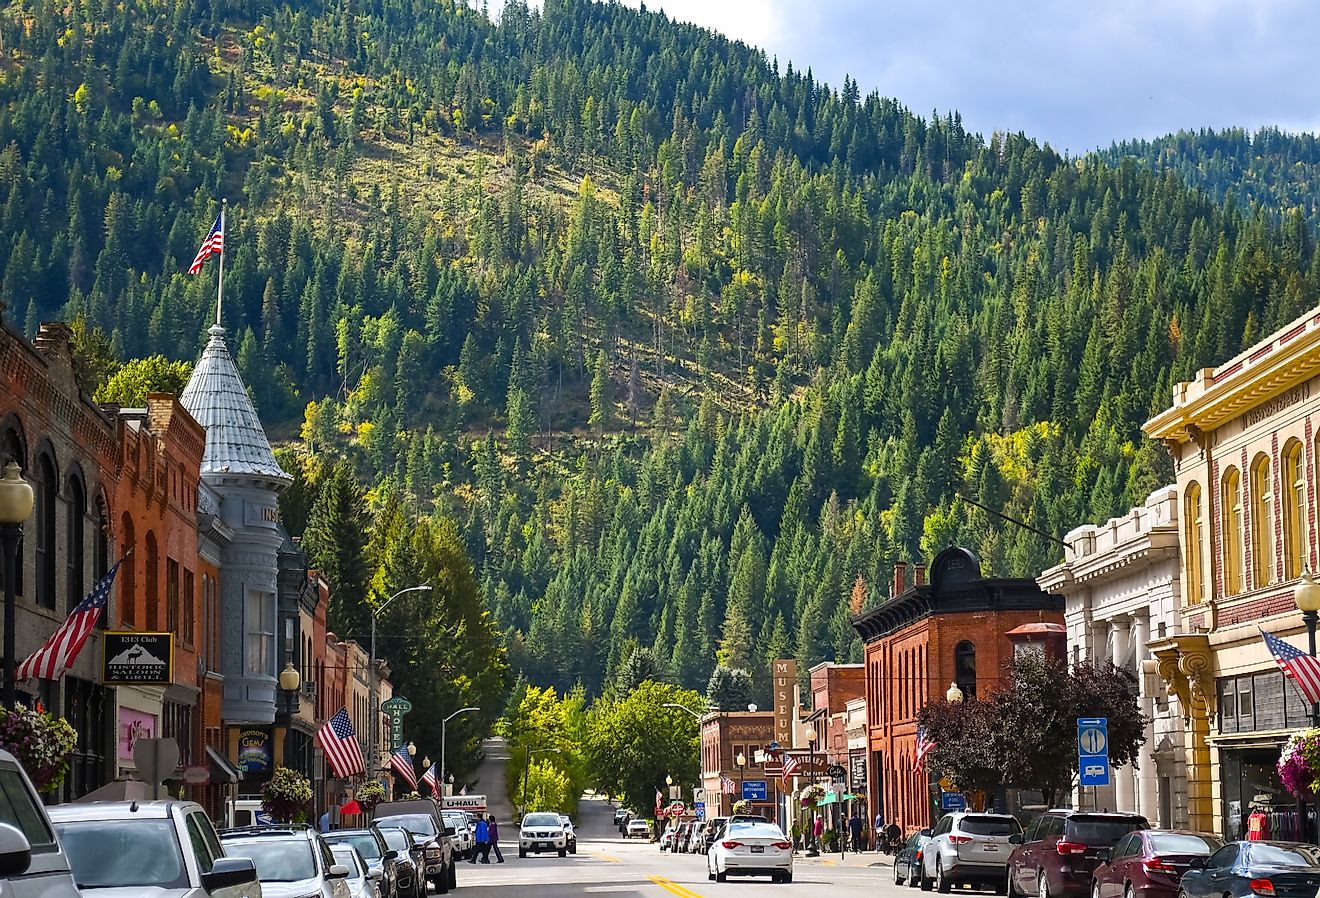 Main street of Wallace, Idaho. Image credit Kirk Fisher via Shutterstock